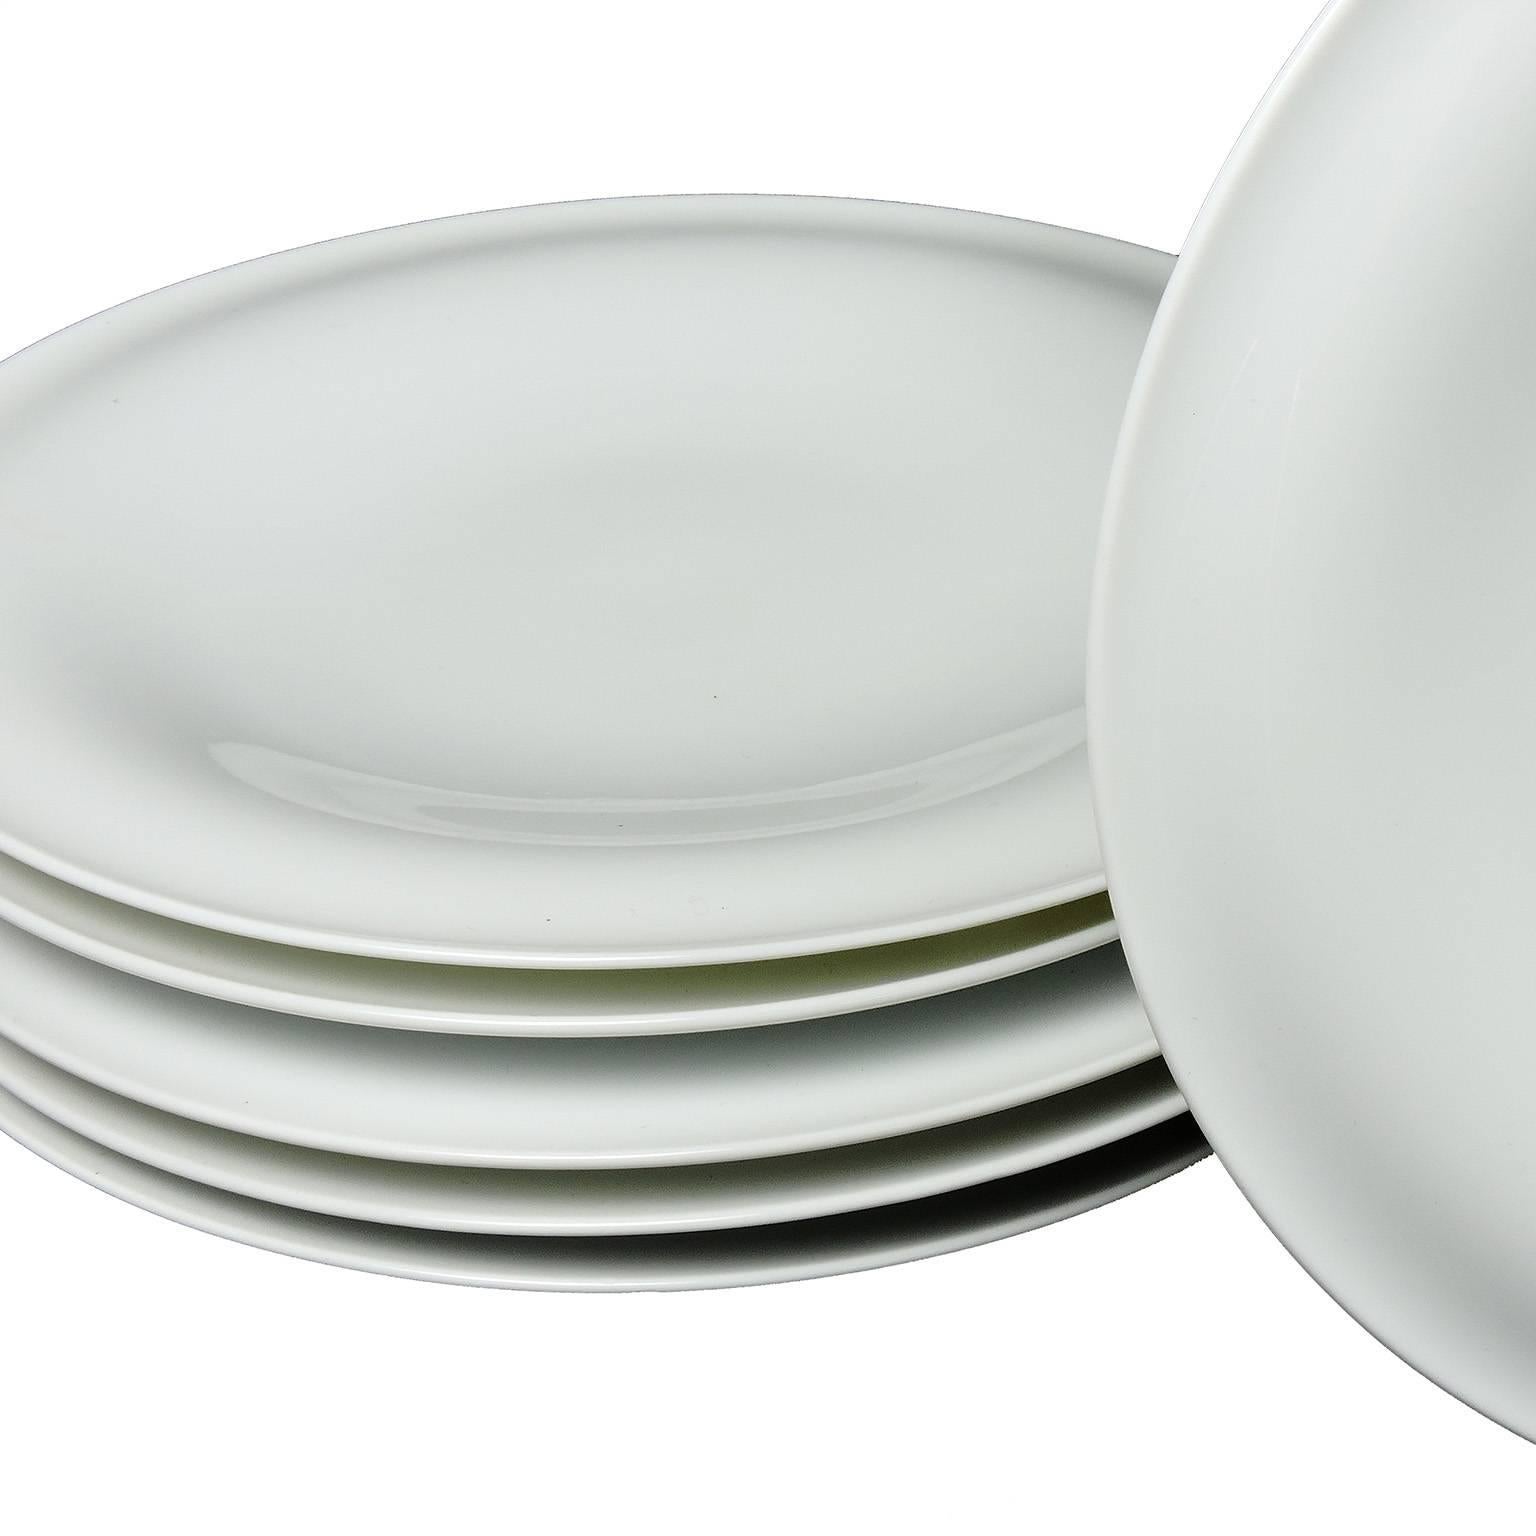 Rare set of 15 Mid-Century Modern “Theme Formal” Yamato porcelain dinner plates by American designer Russel Wright (1904-1976). One of the last dinnerware patterns Wright designed, circa 1964. White porcelain plates with raised rim, diameter: 10 ¾